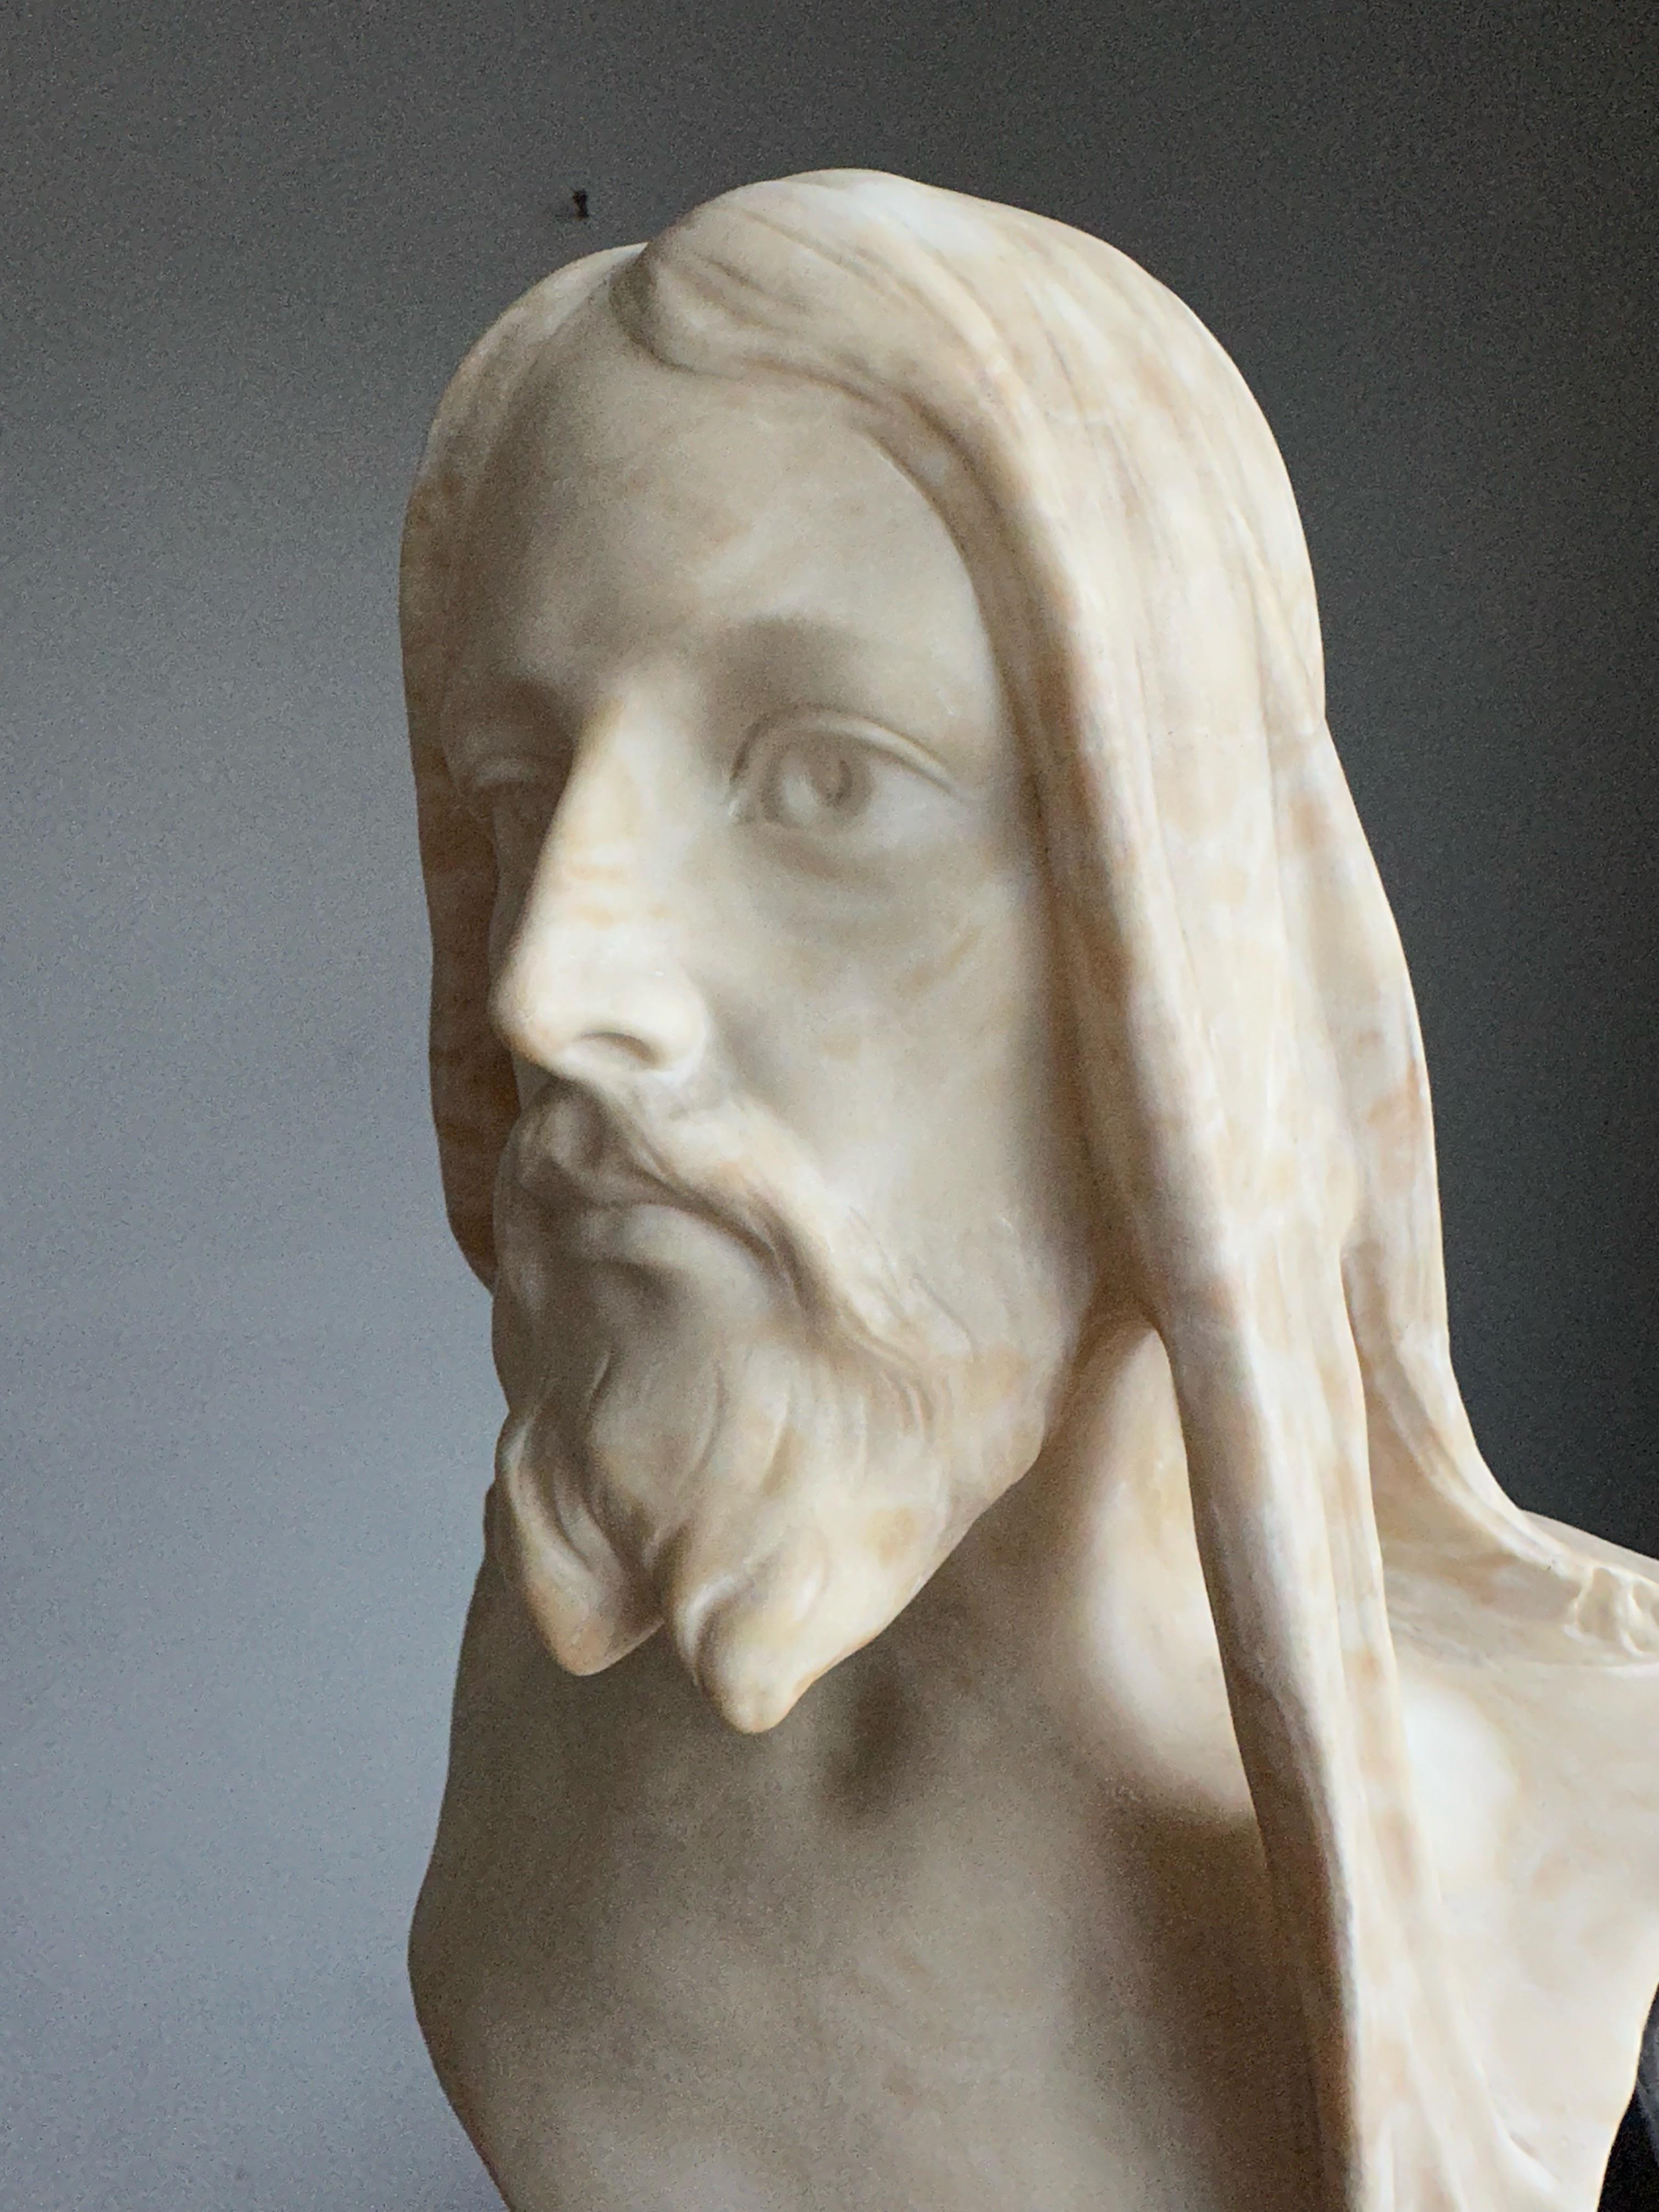 Antique, Early 1900 Large Hand Carved Alabaster Sculpture / Bust of Jesus Christ For Sale 7